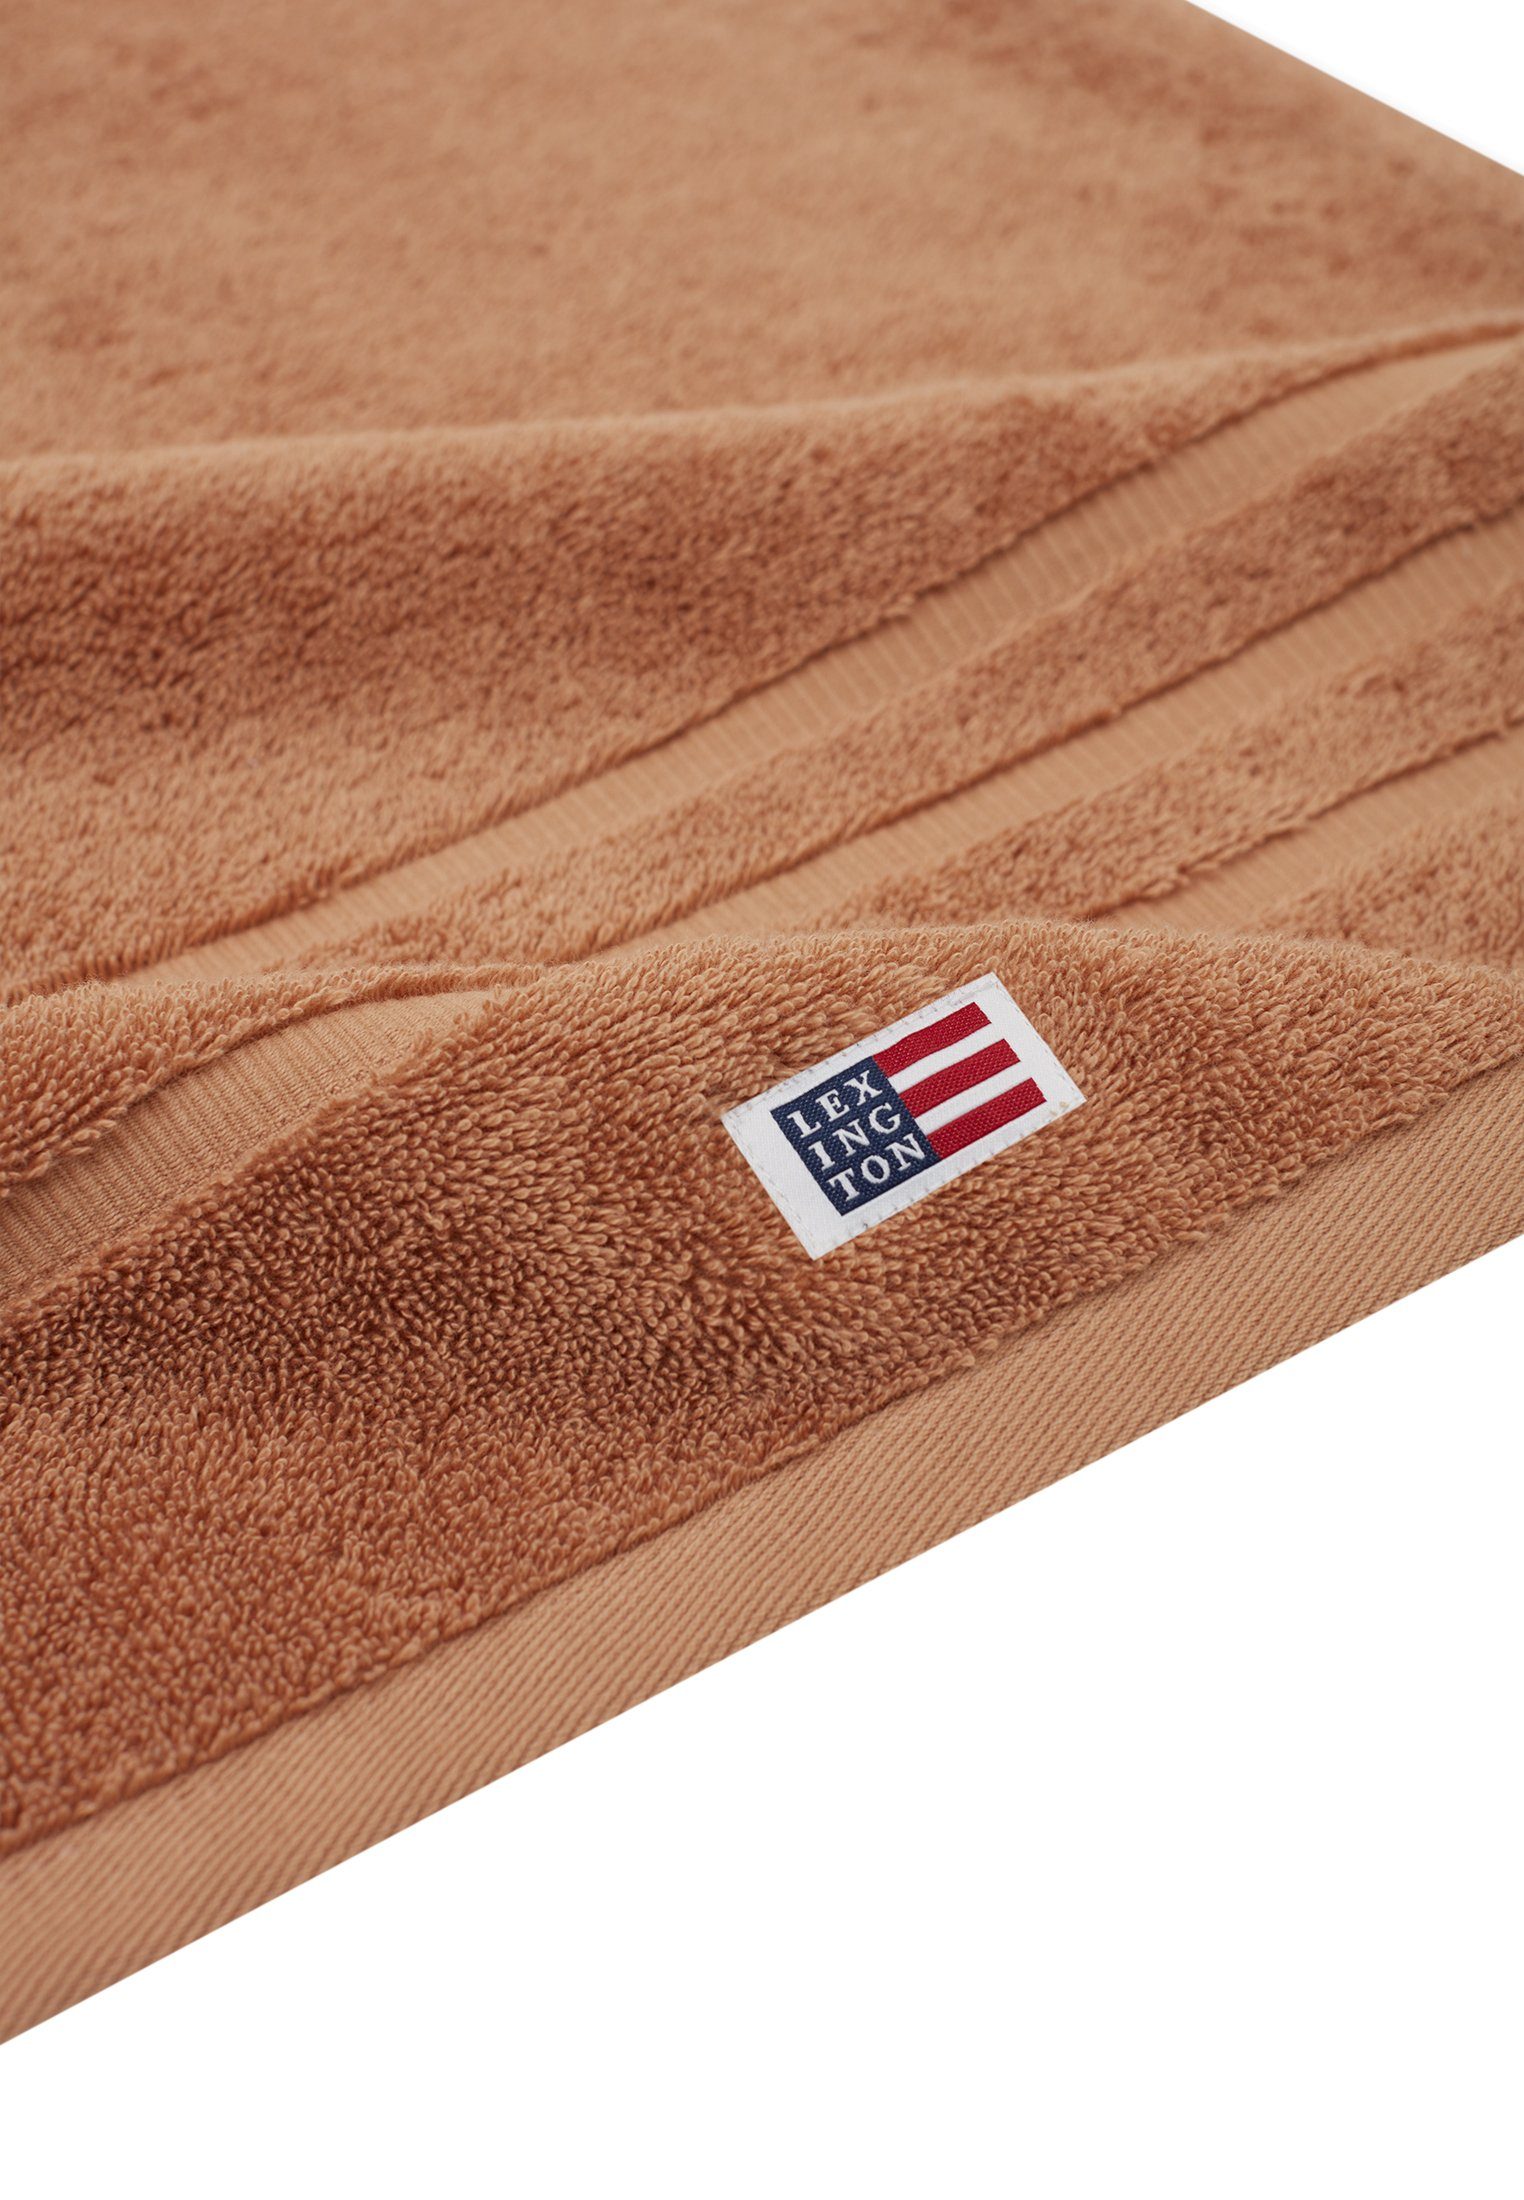 Towel Original almond Handtuch beige Lexington